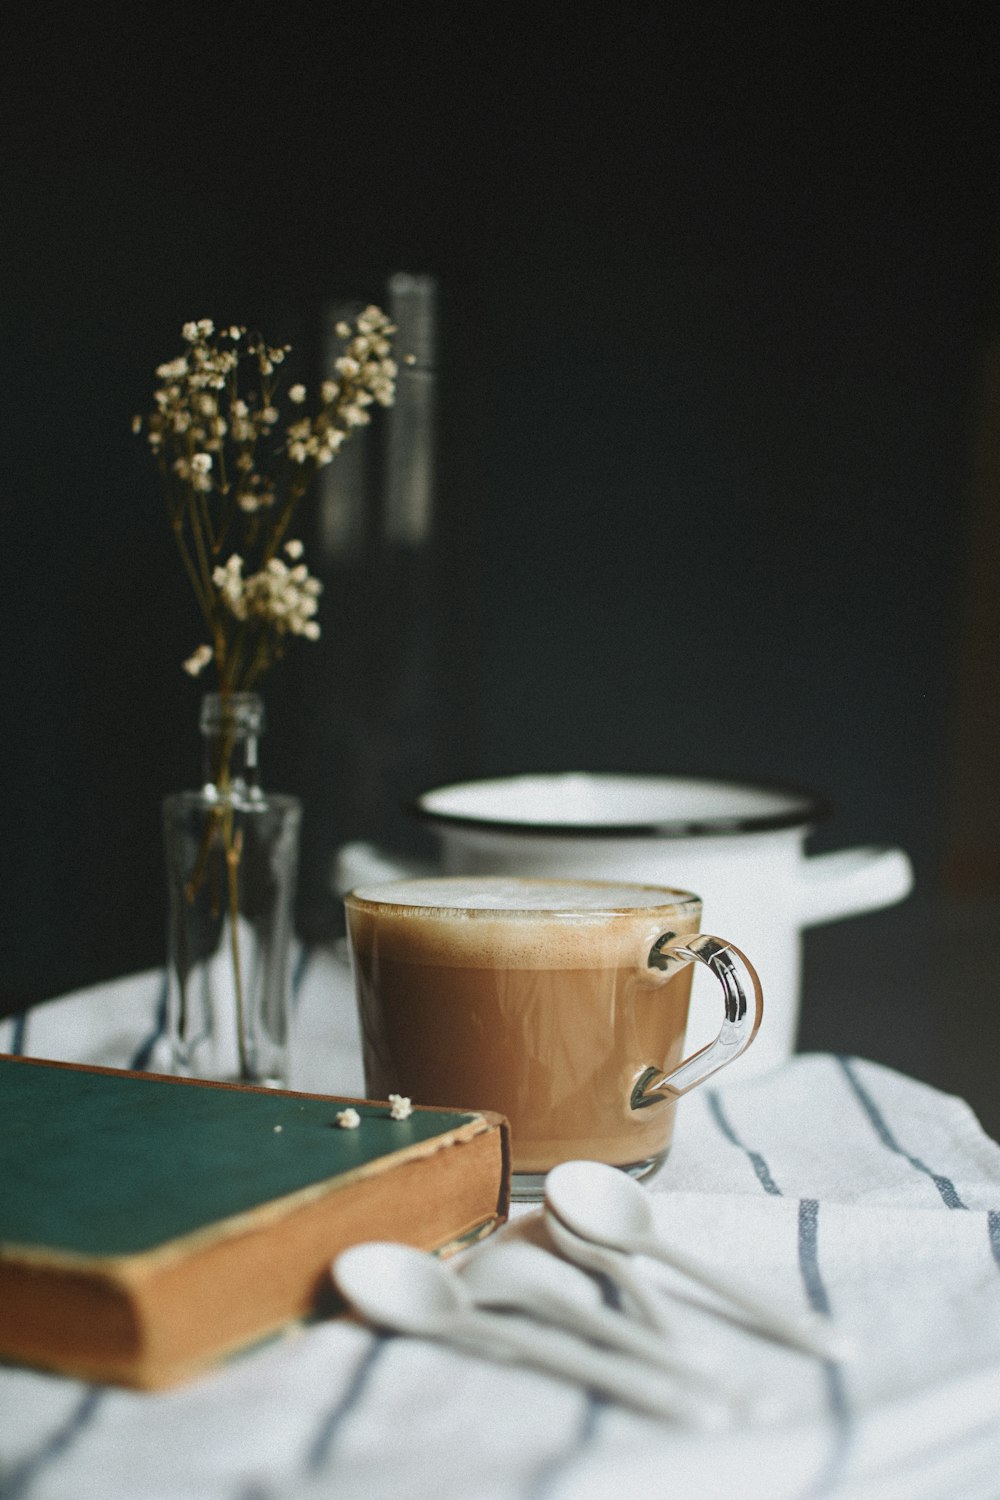 white ceramic mug on white table cloth